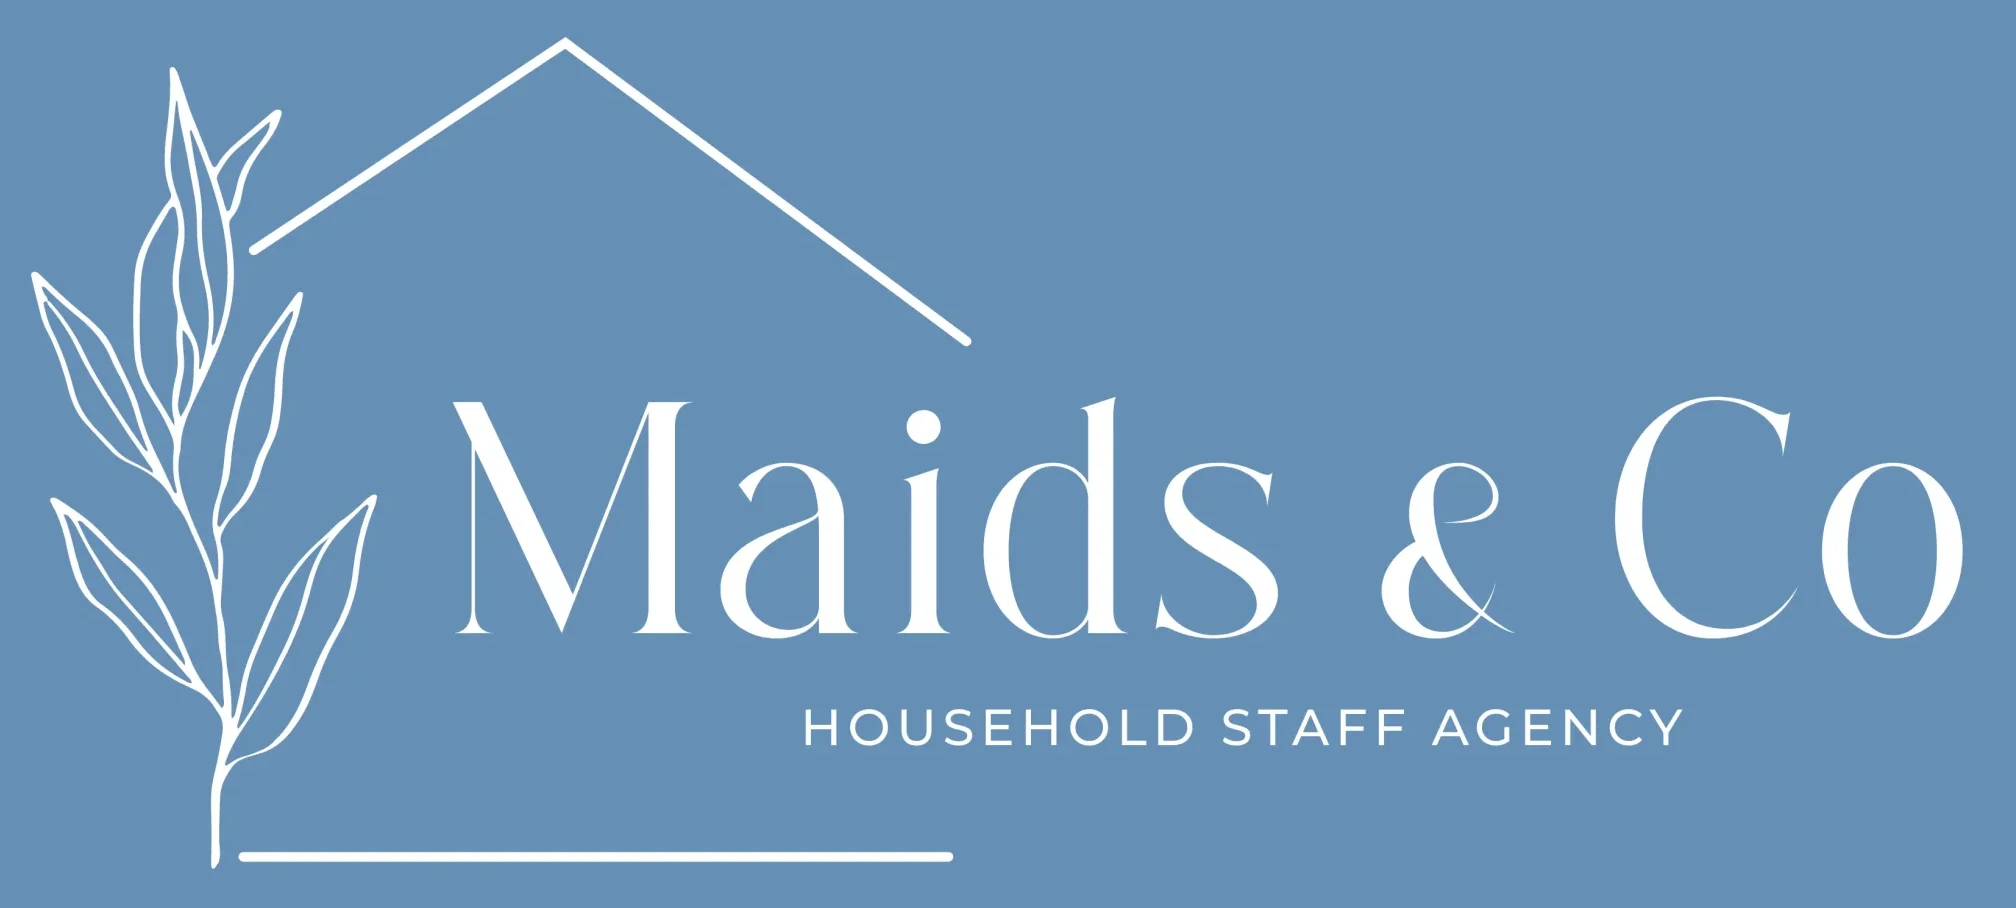 maids&co_azul_logo